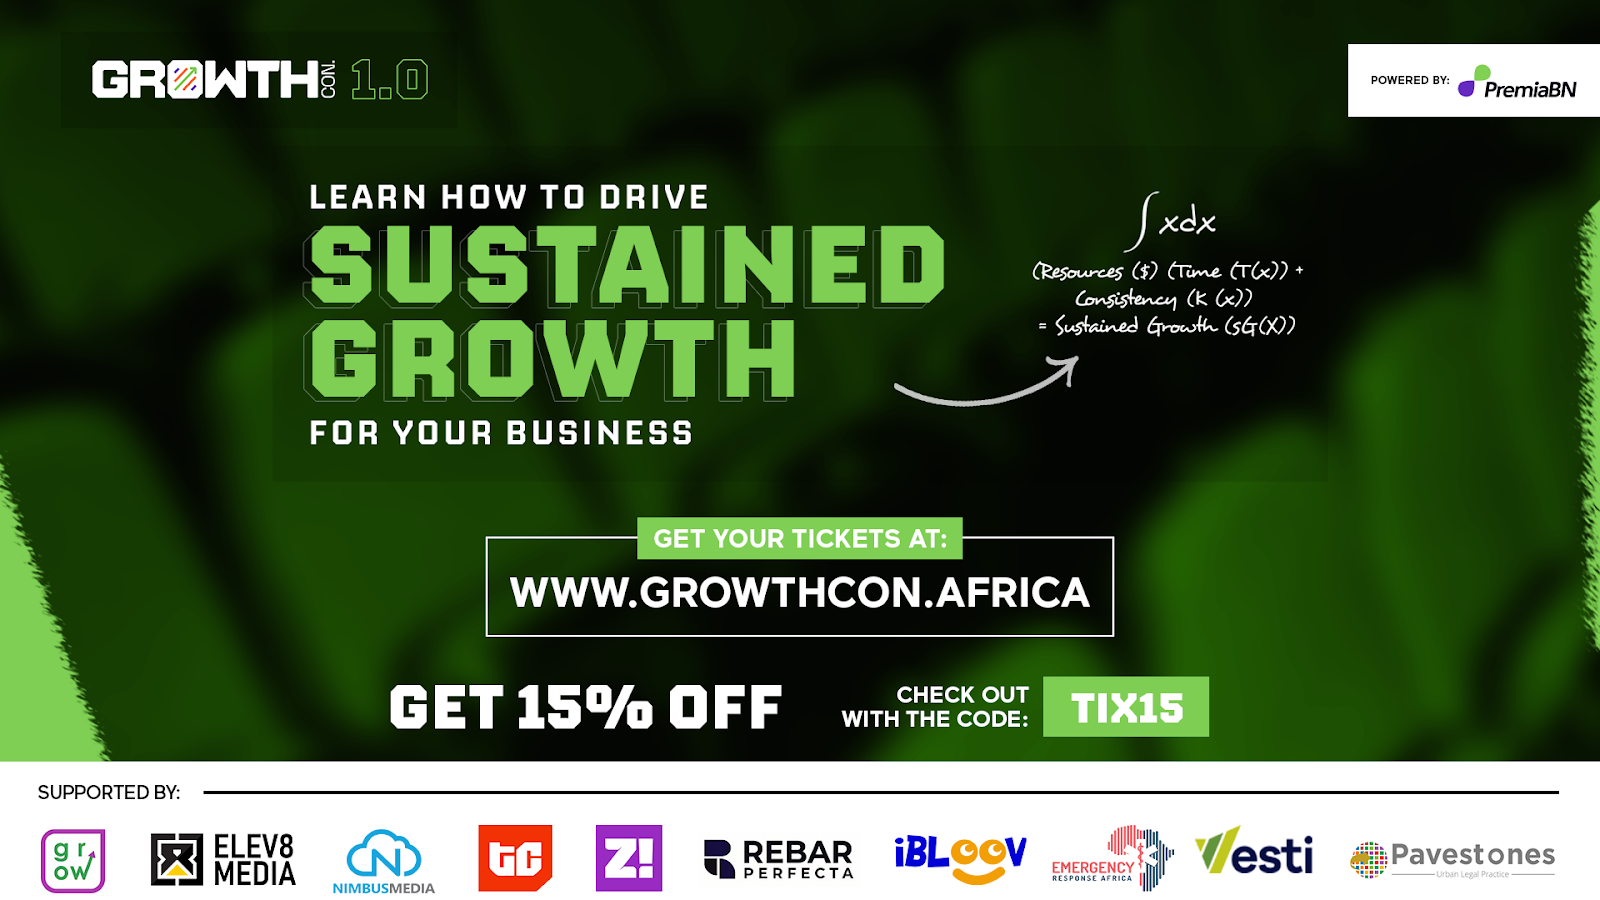 Growthcon ad